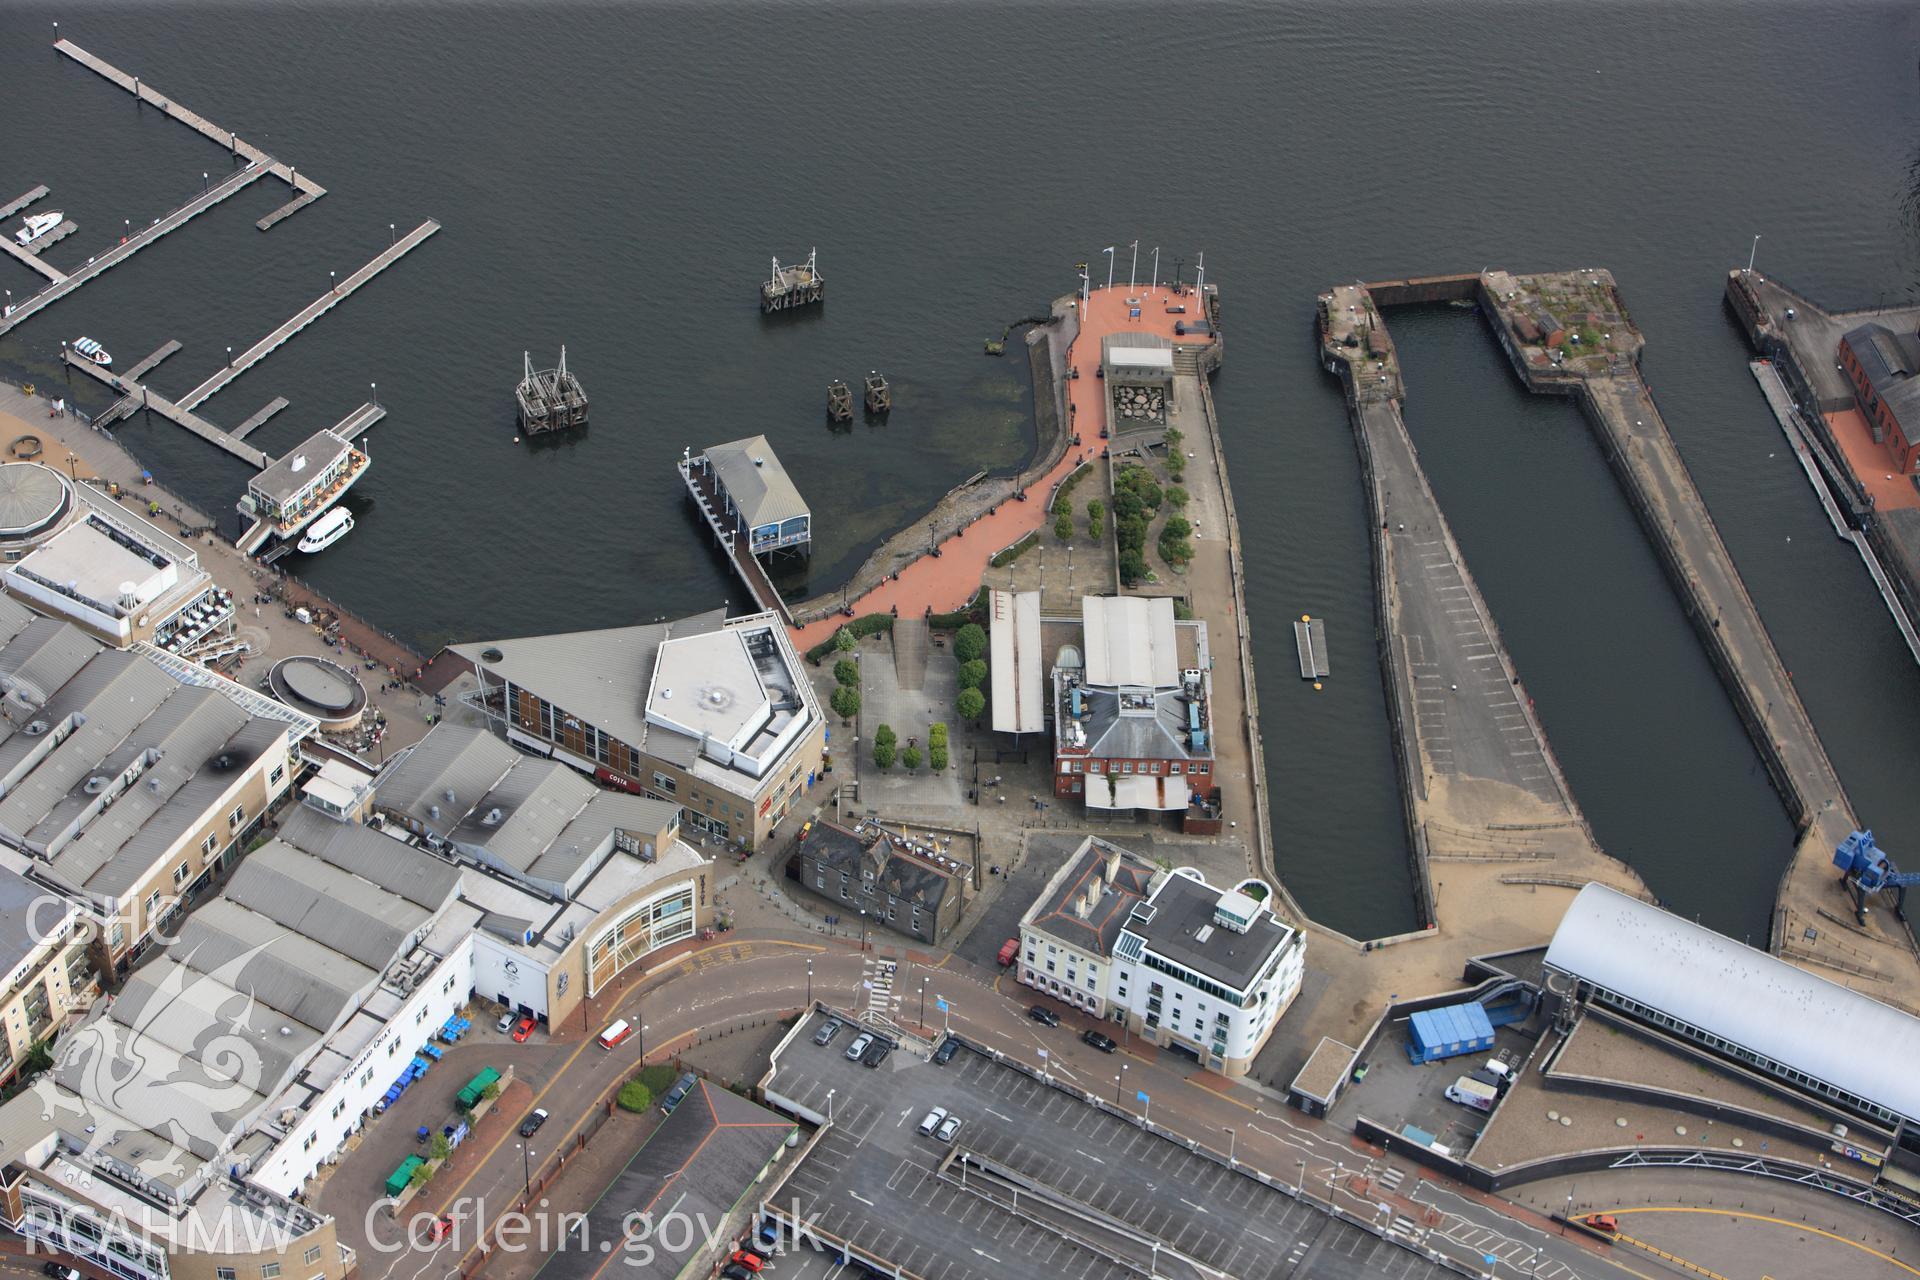 RCAHMW colour oblique photograph of Mount Stuart Graving Docks. Taken by Toby Driver on 13/06/2011.